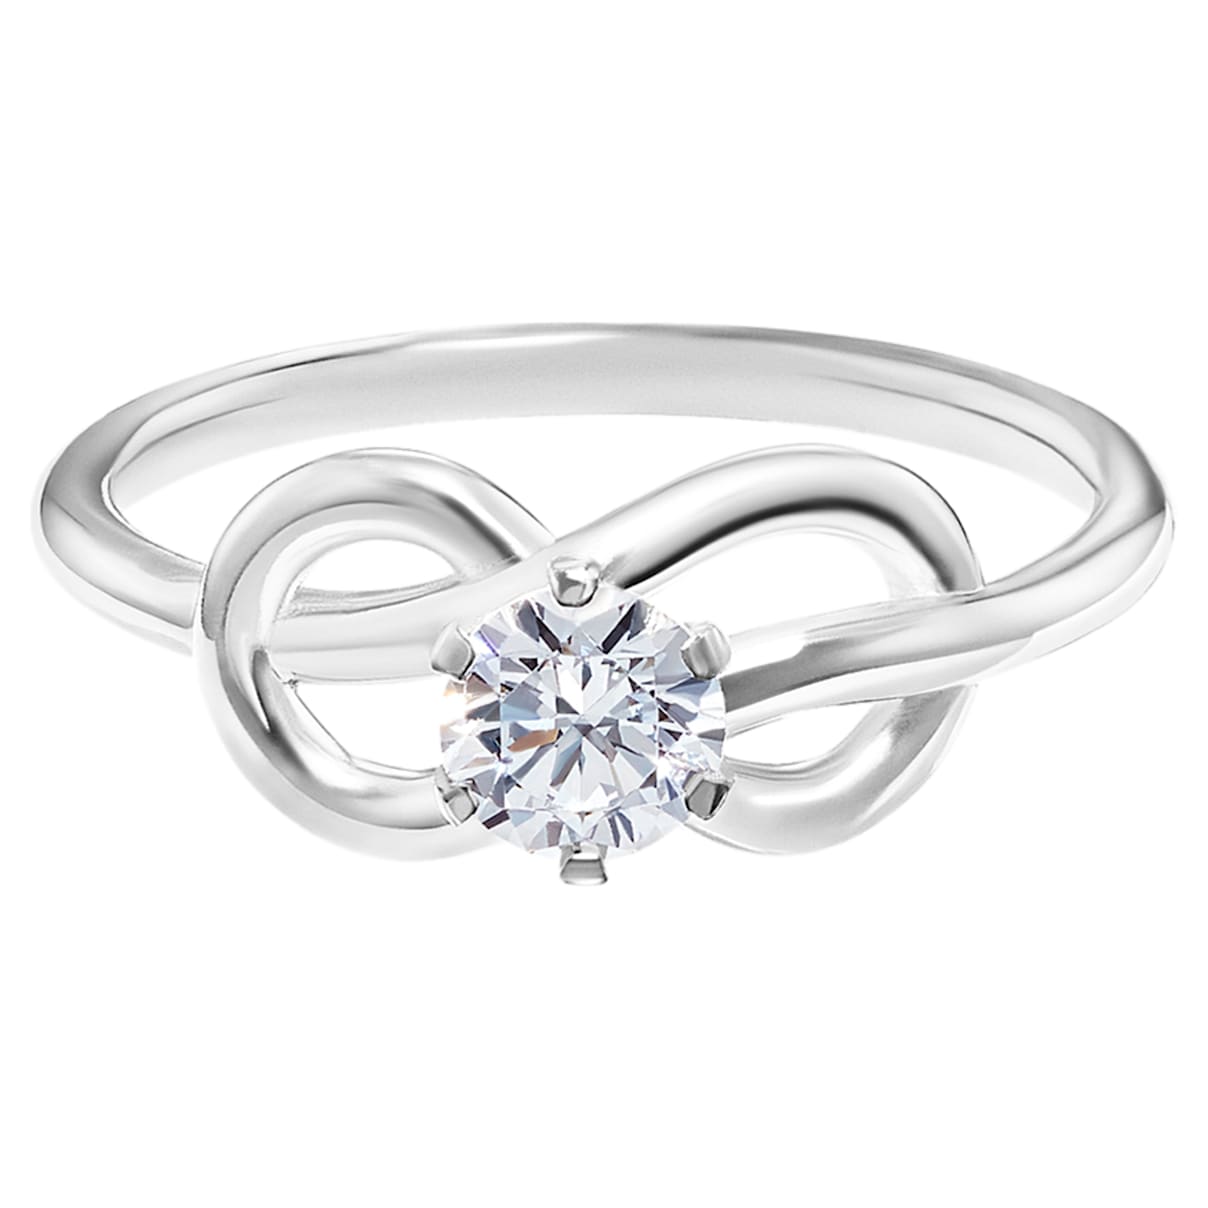 Knot of True Love Savoy Ring 0.75ct, Swarovski Created Diamonds, 18K White Gold, Size 58